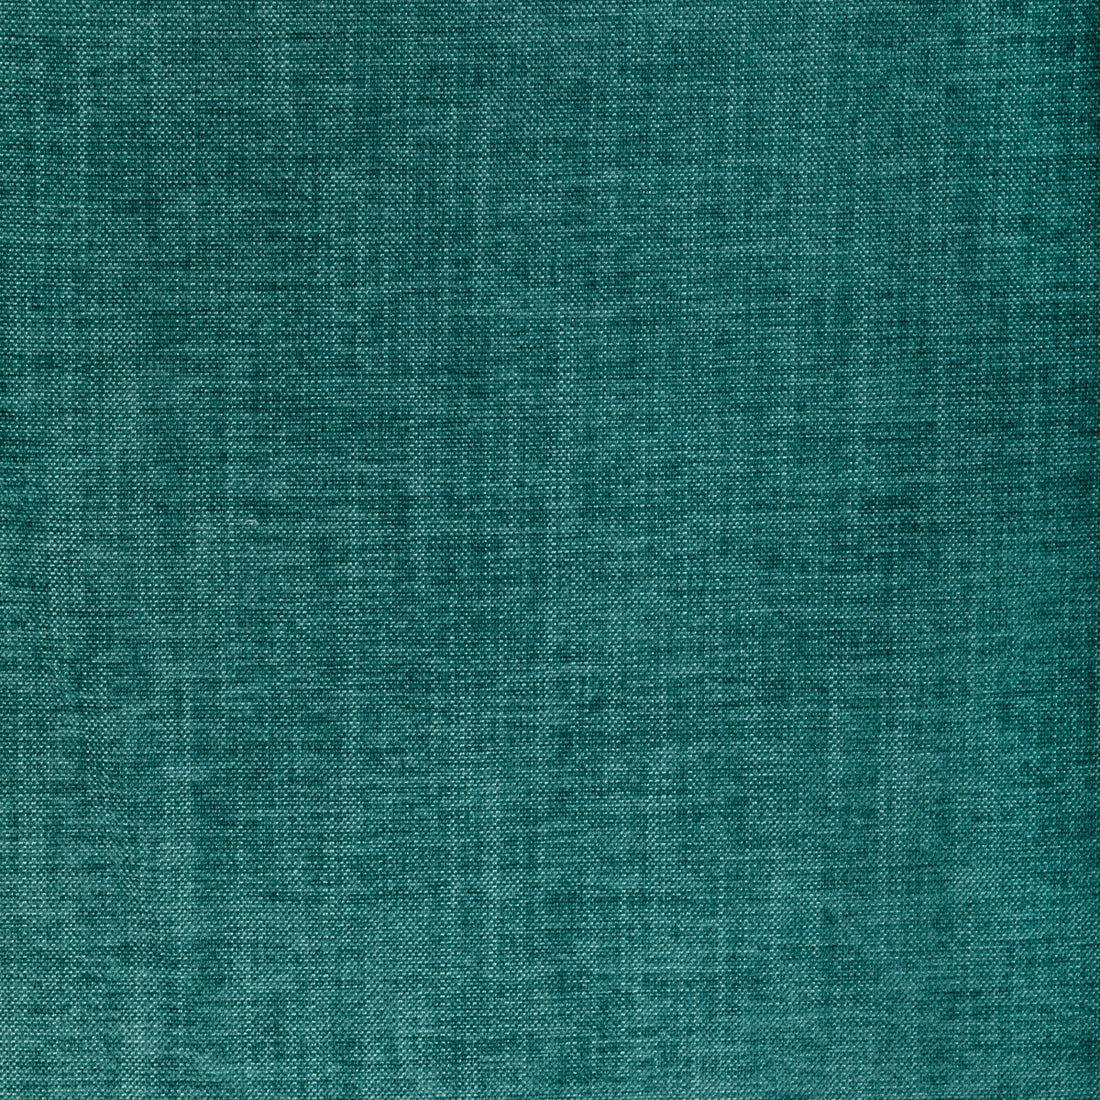 Kravet Smart fabric in 36650-135 color - pattern 36650.135.0 - by Kravet Smart in the Performance Kravetarmor collection